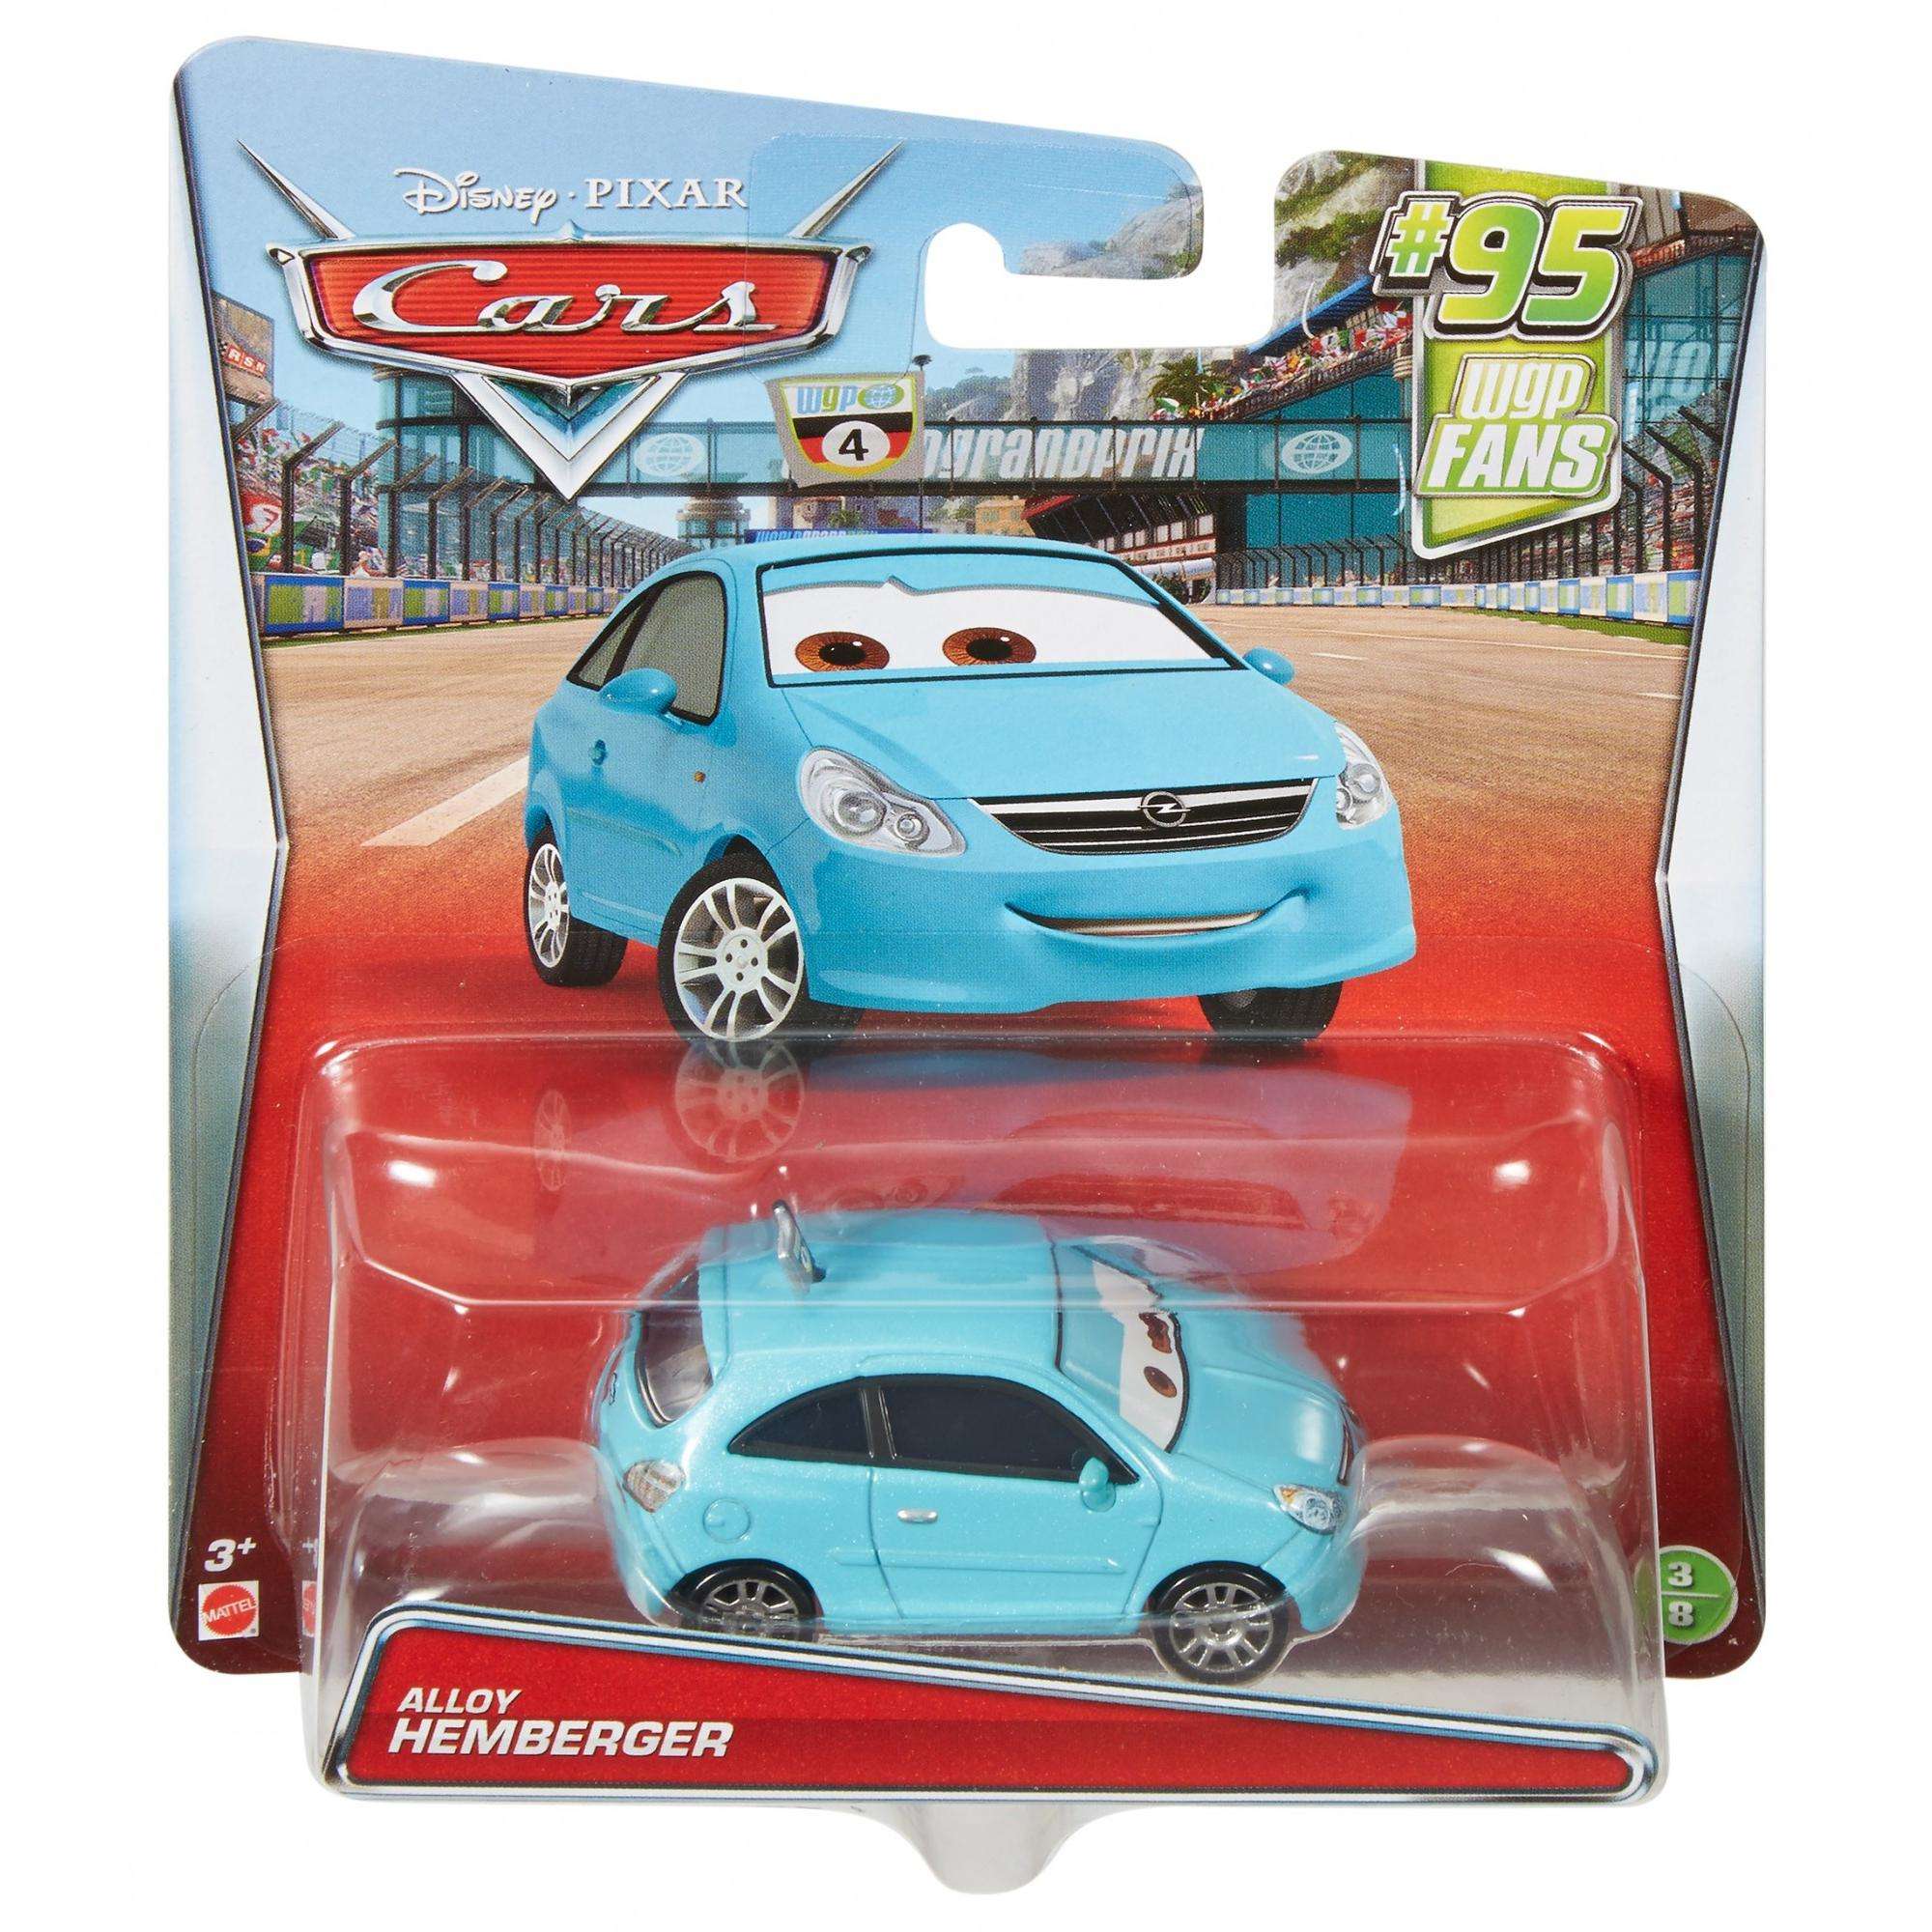 Disney/Pixar Cars Alloy Hemberger Die-Cast Character Vehicle - image 2 of 3